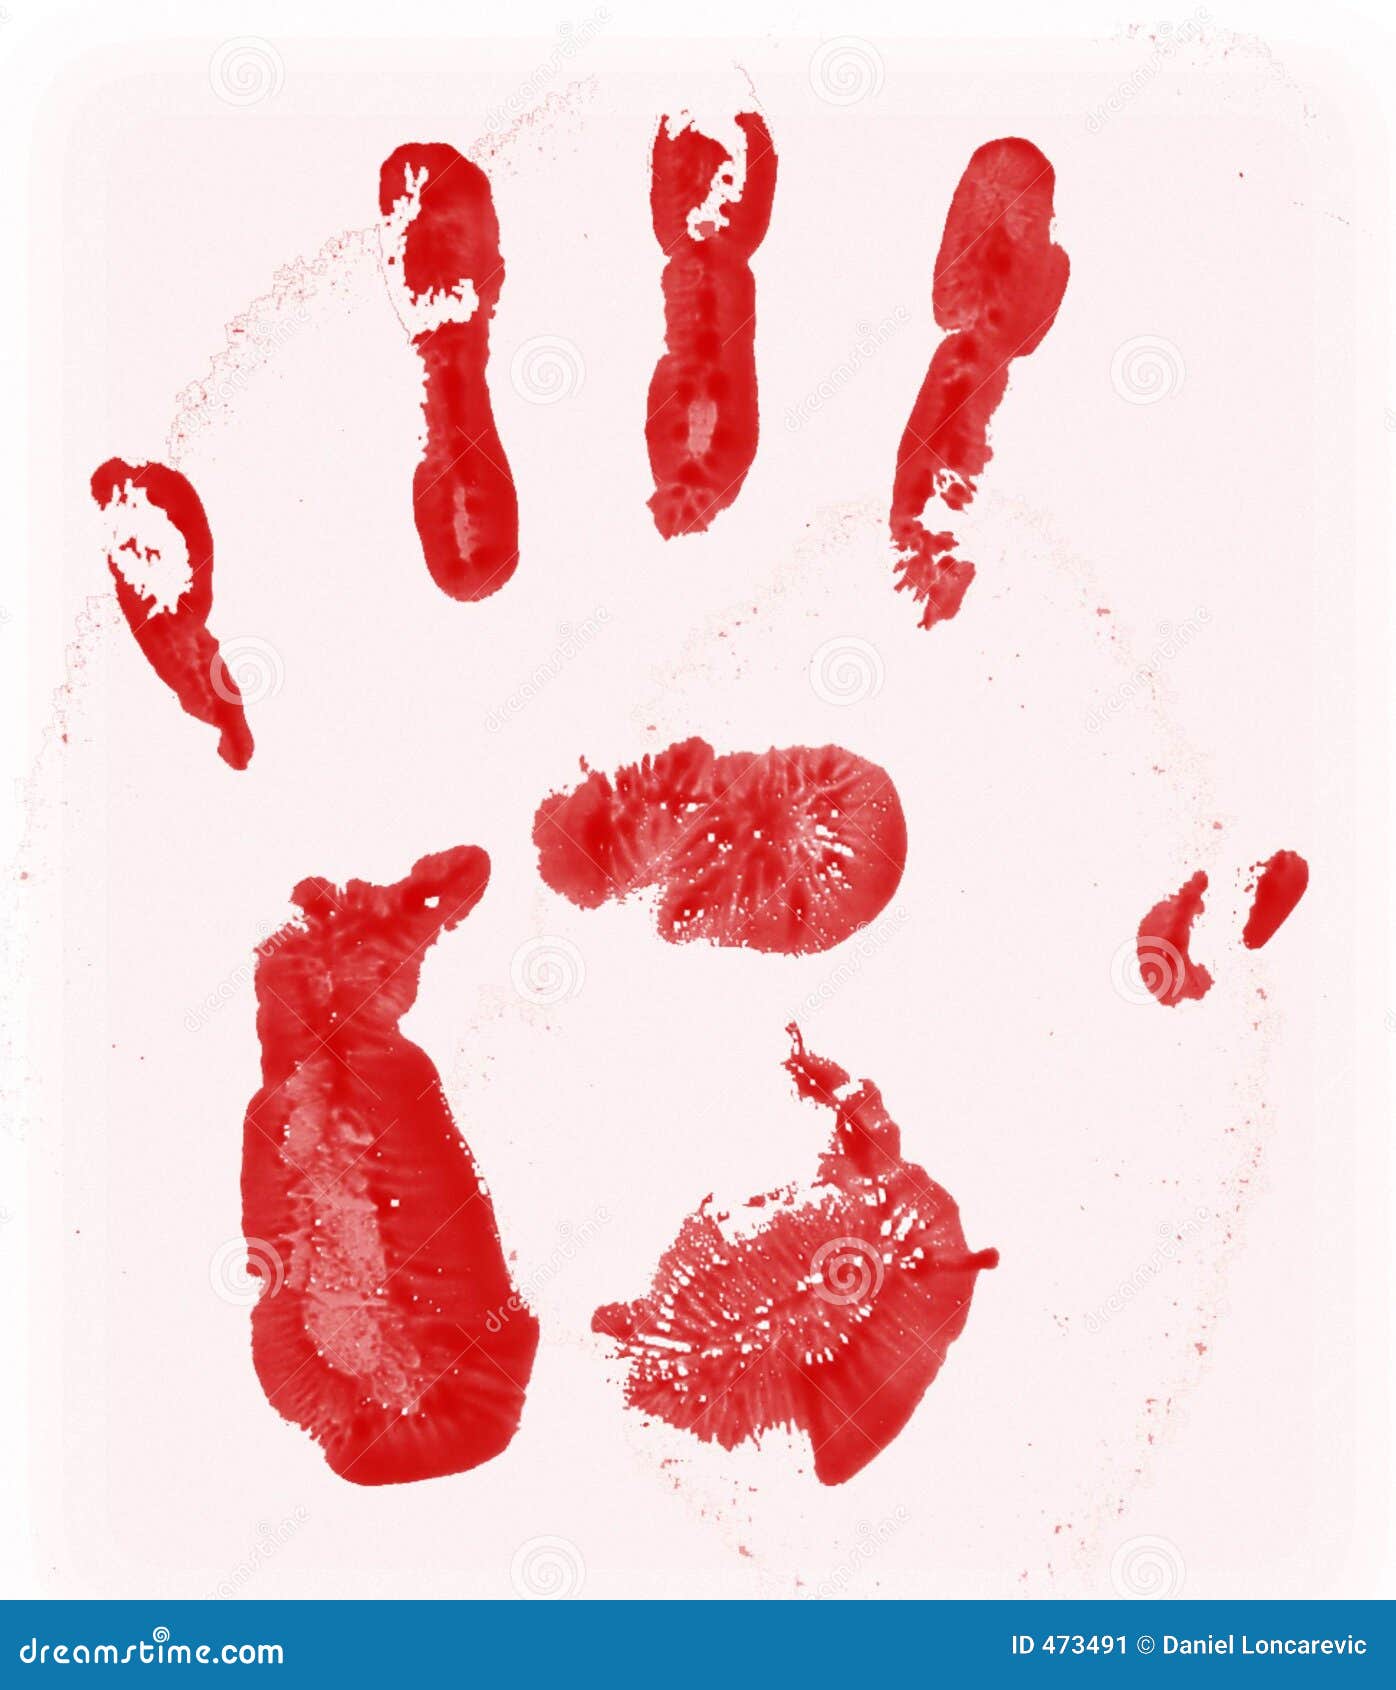 bloody handprint clipart - photo #46